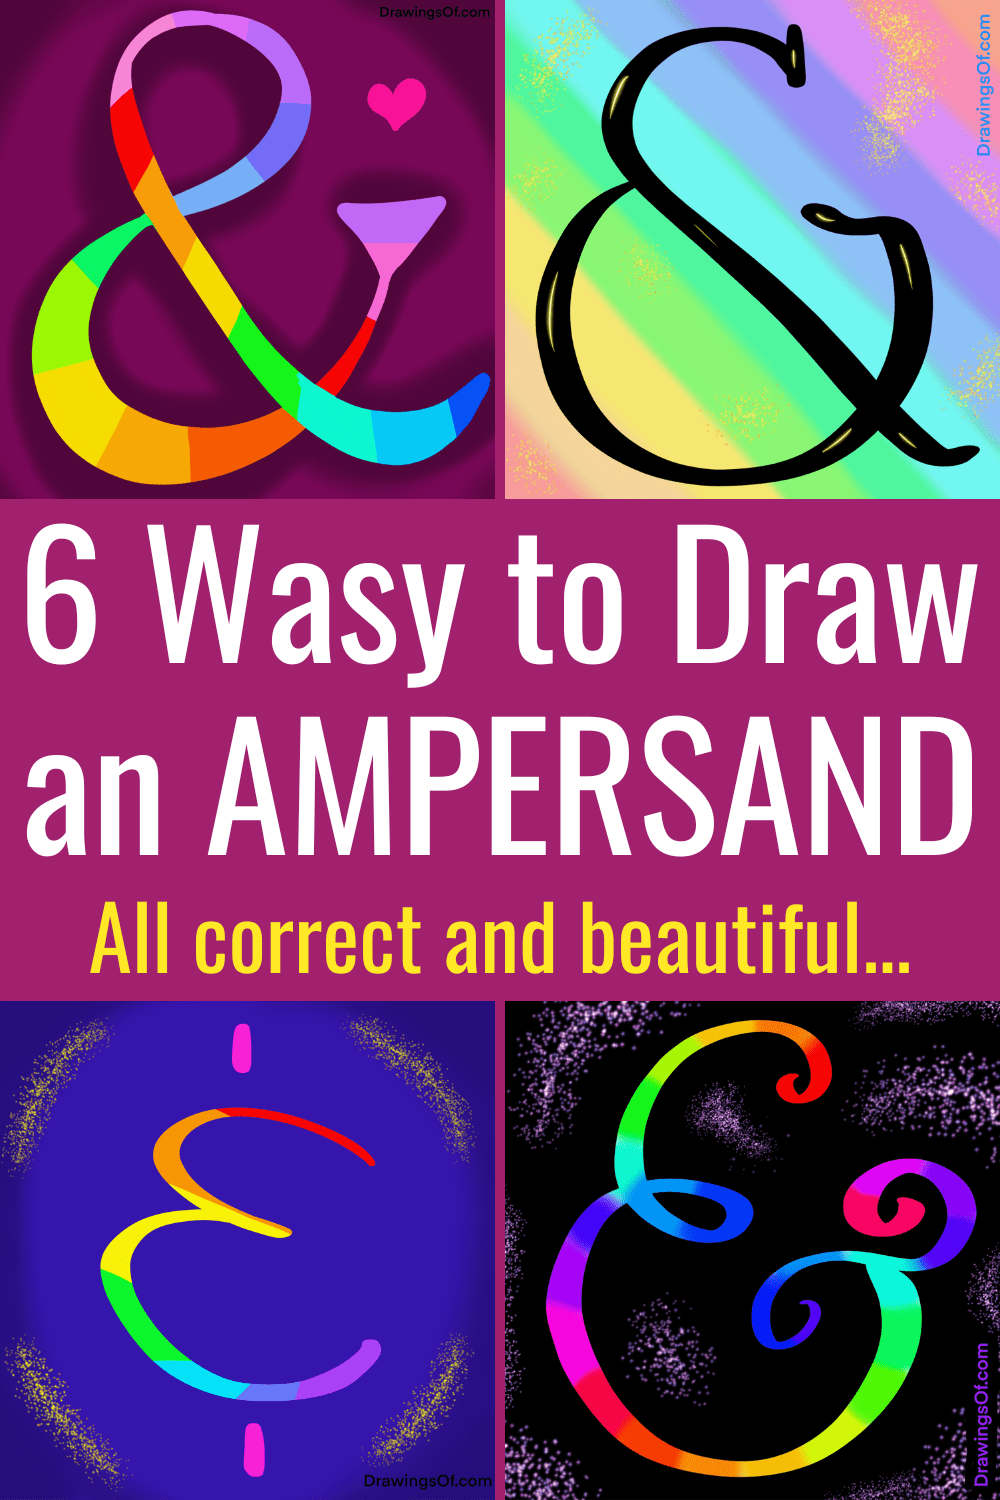 Ampersand and symbol